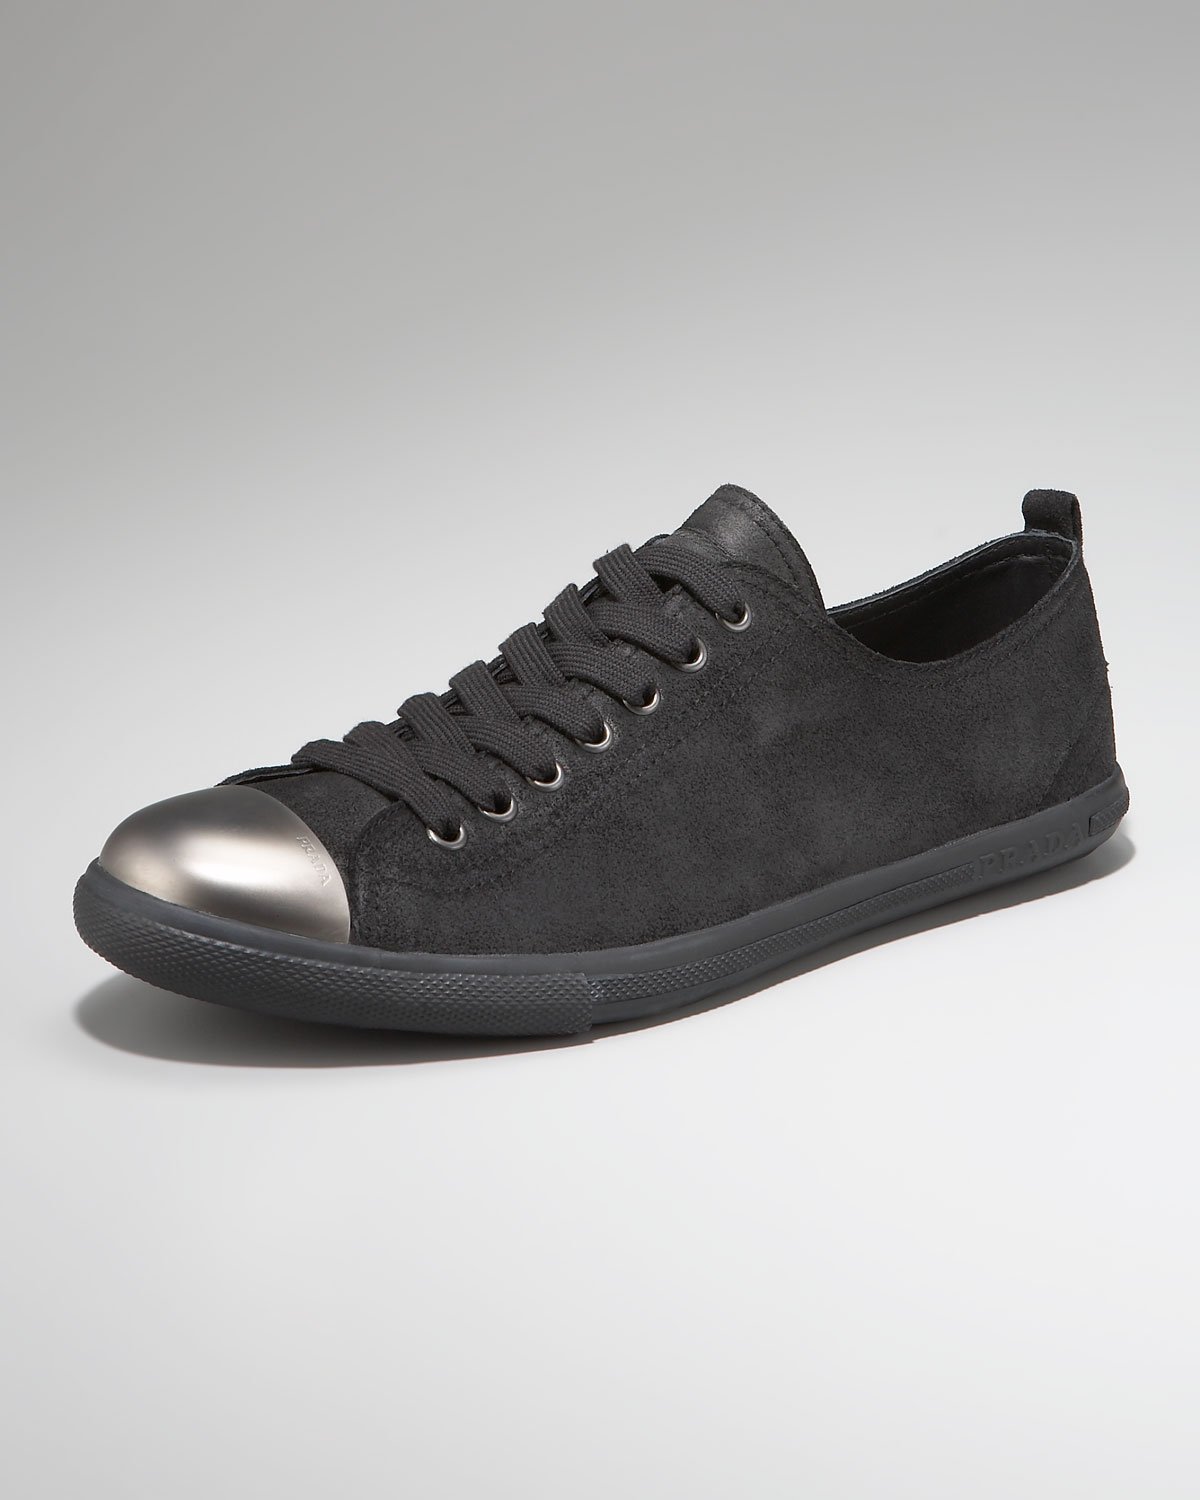 vans steel toe cap buy clothes shoes online